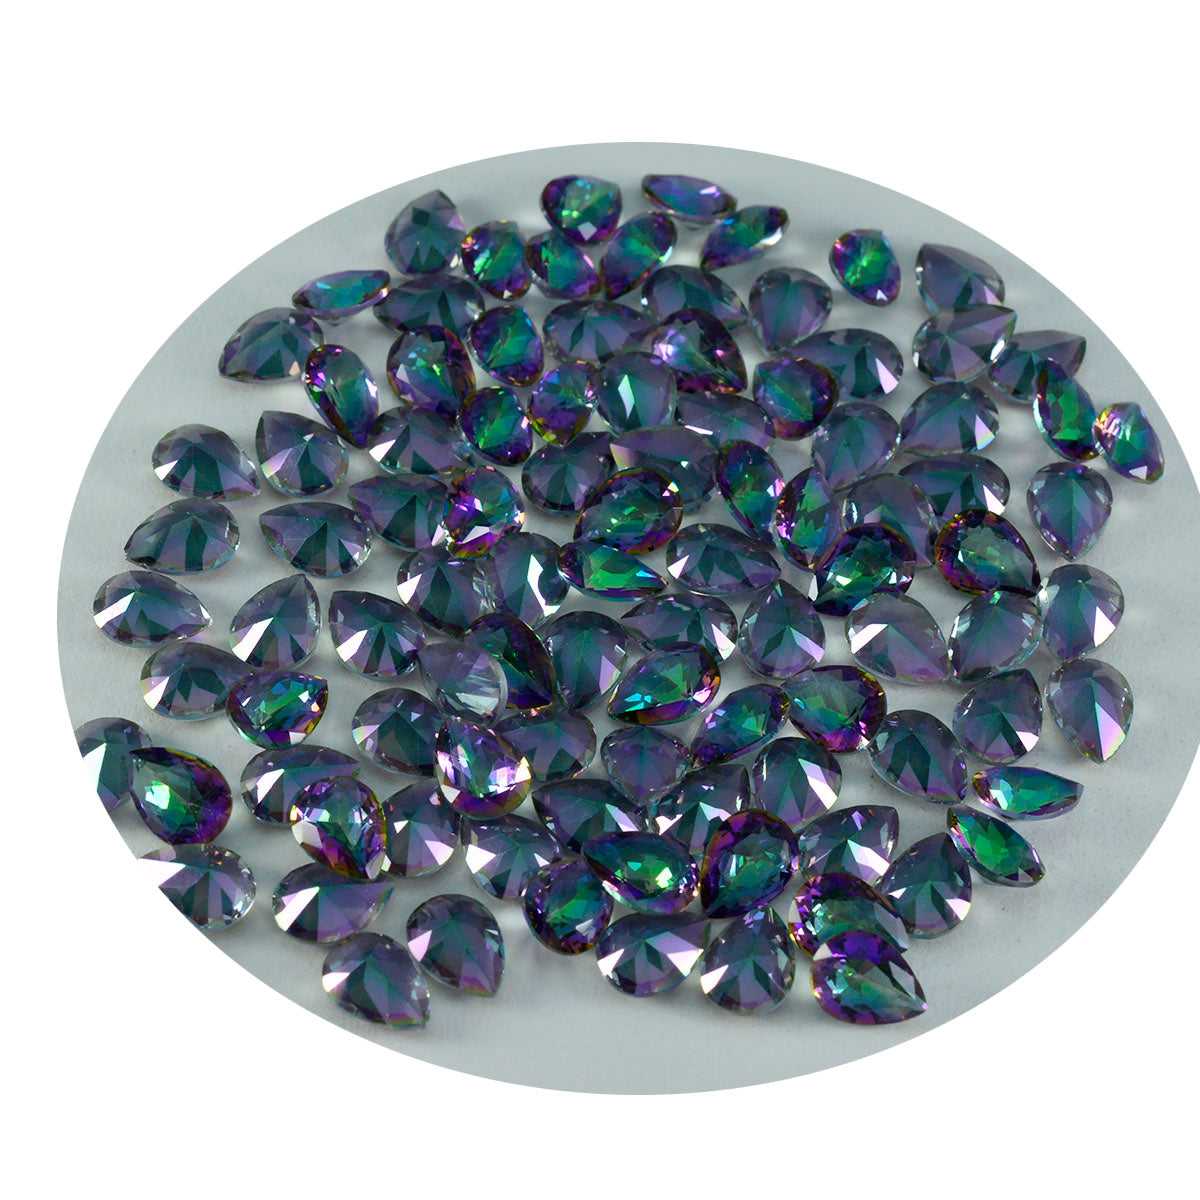 Riyogems 1PC Multi Color Mystic Quartz Faceted 4x6 mm Pear Shape pretty Quality Loose Gemstone